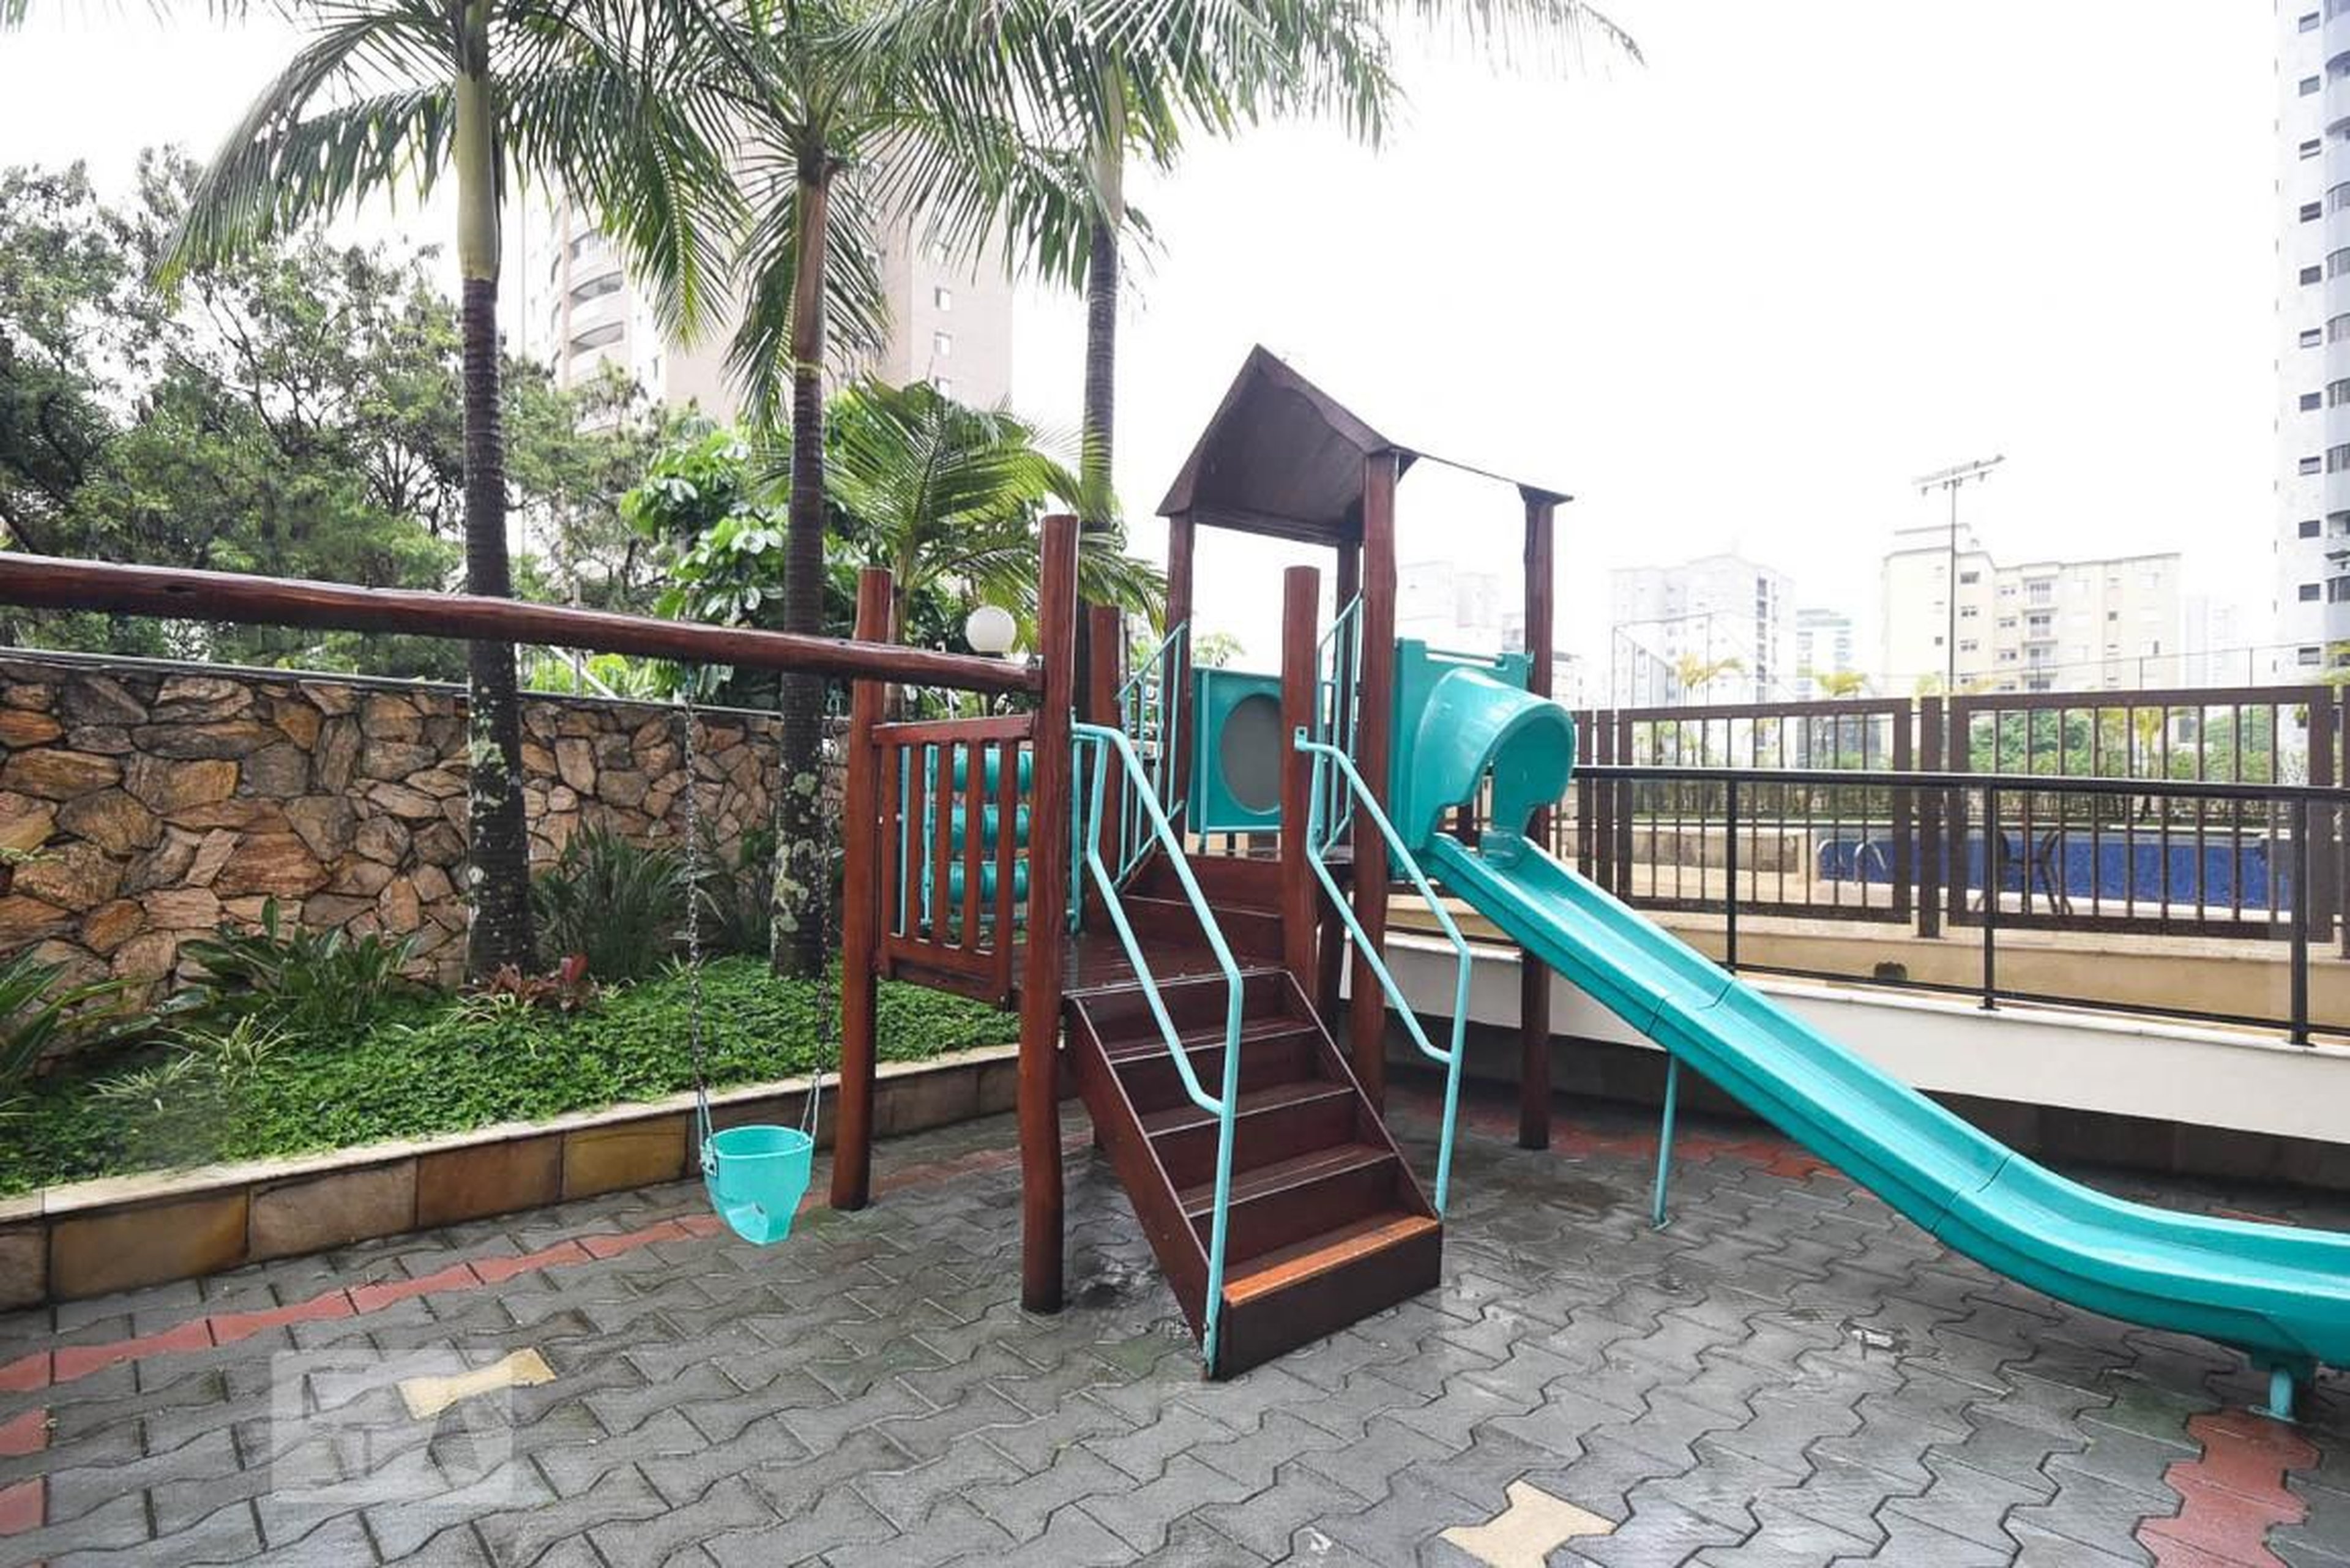 Playground - Jardim de Giverny